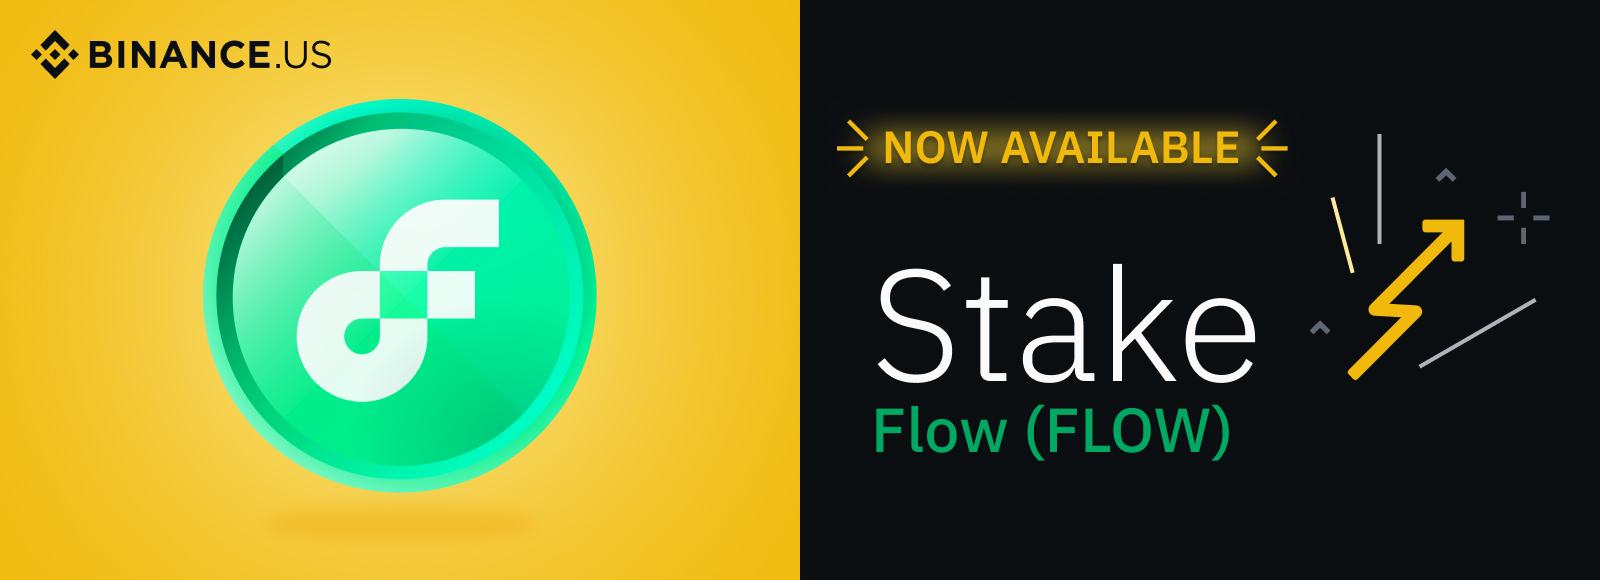 StakingLaunch_FLOW-Announcement_1600X580.jpg